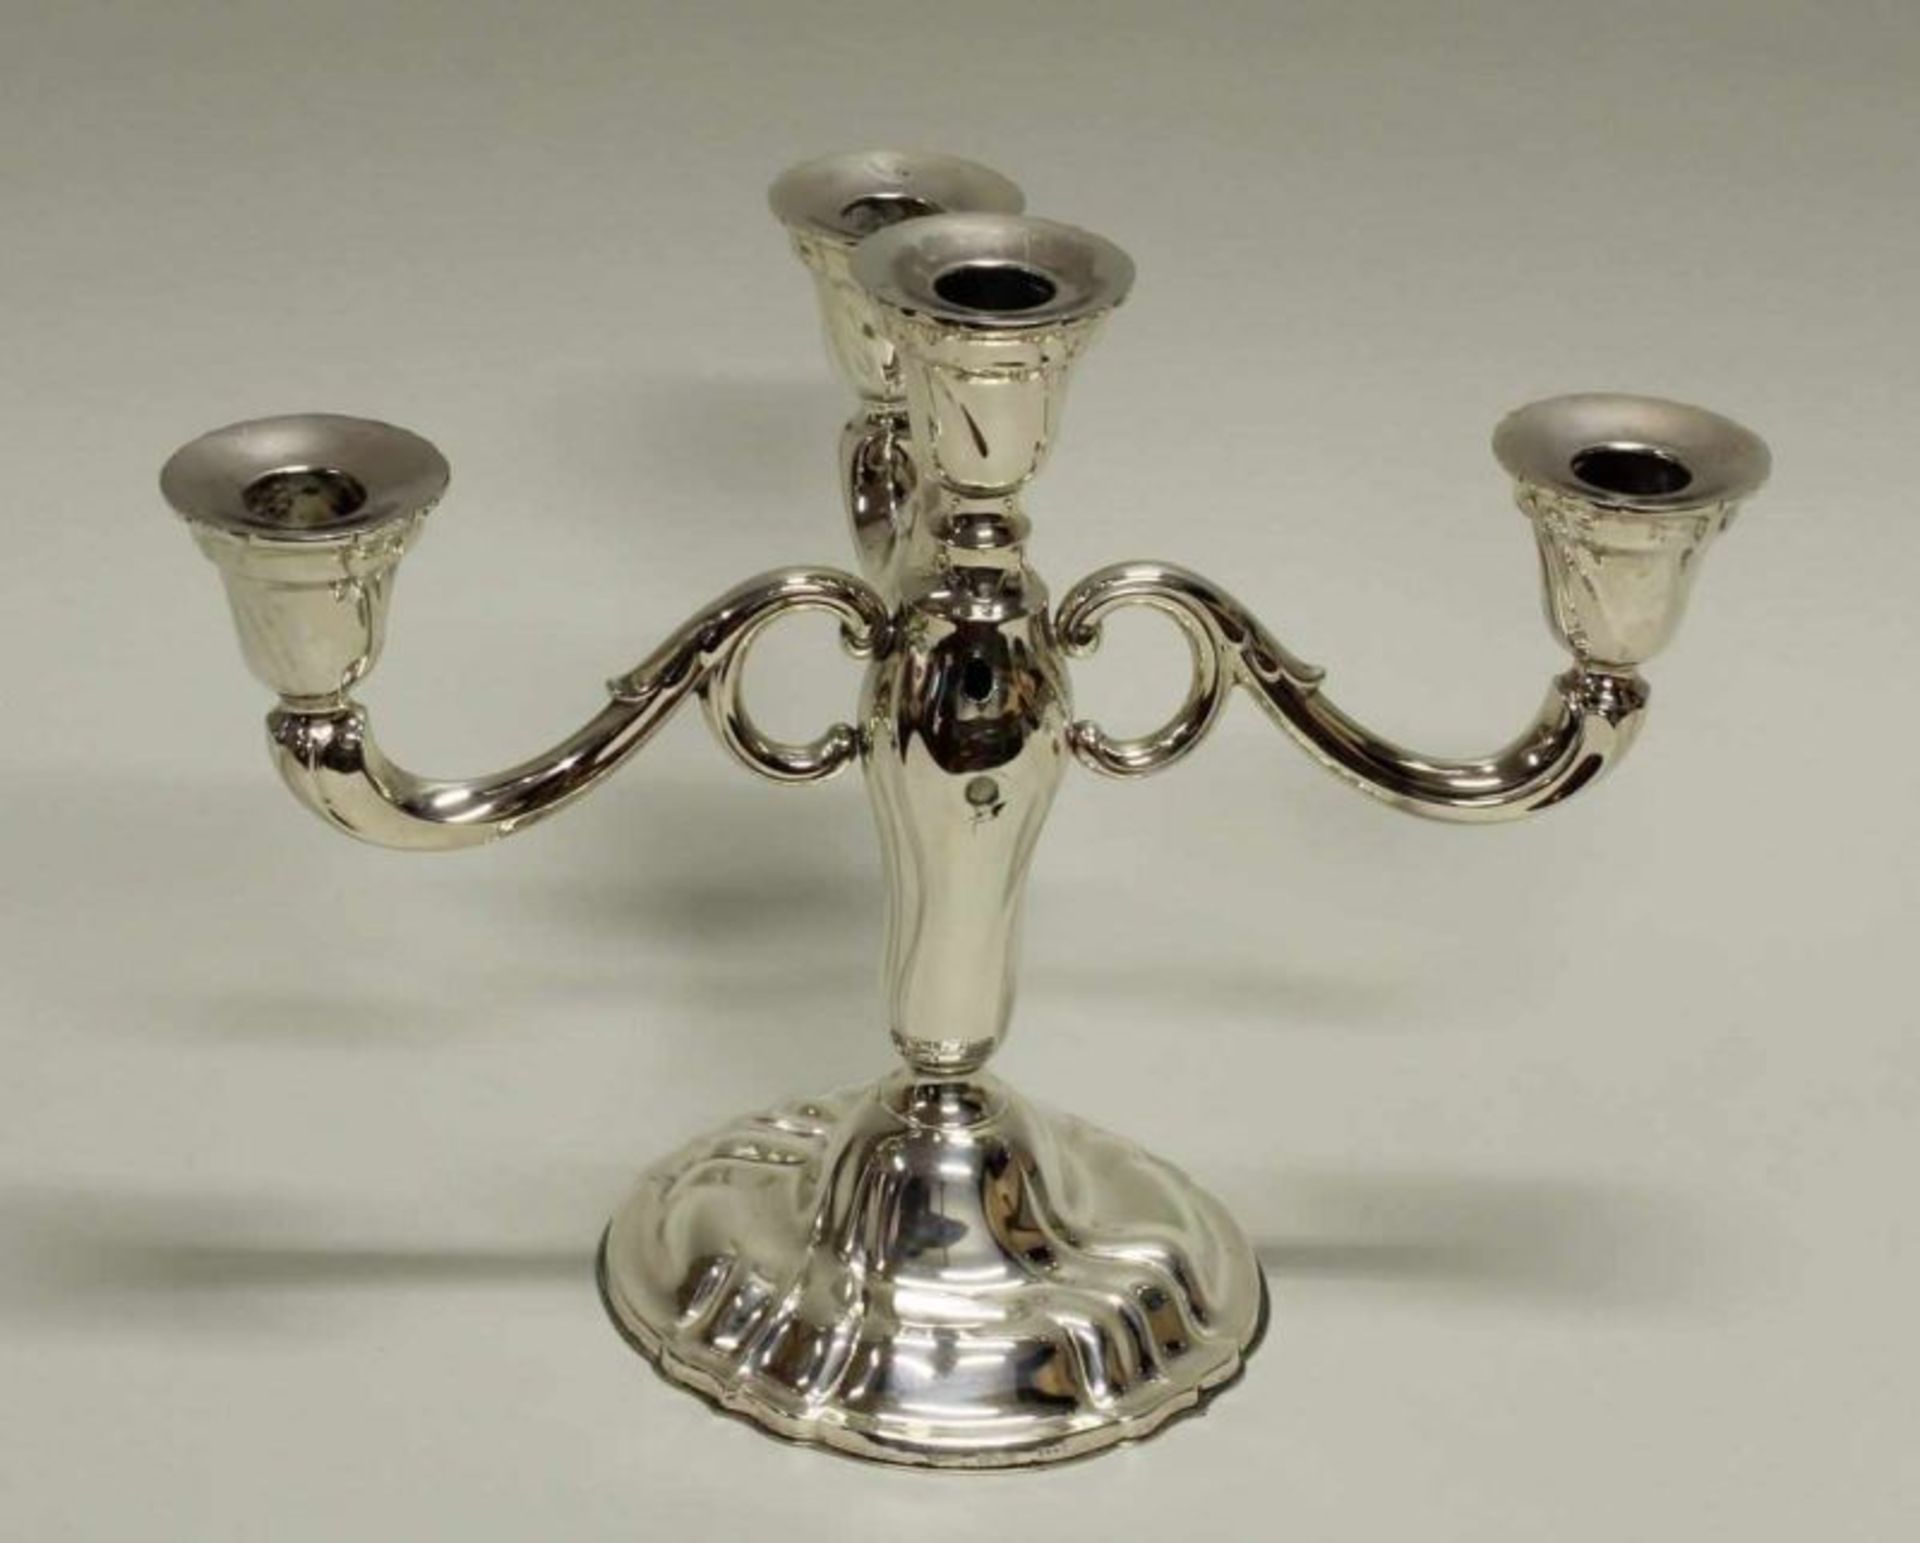 Kerzenleuchter, Silber 835, Wilkens, Barockform, mit vier Kerzentüllen, Boden verschraubt, 24.8 cm - Image 3 of 3